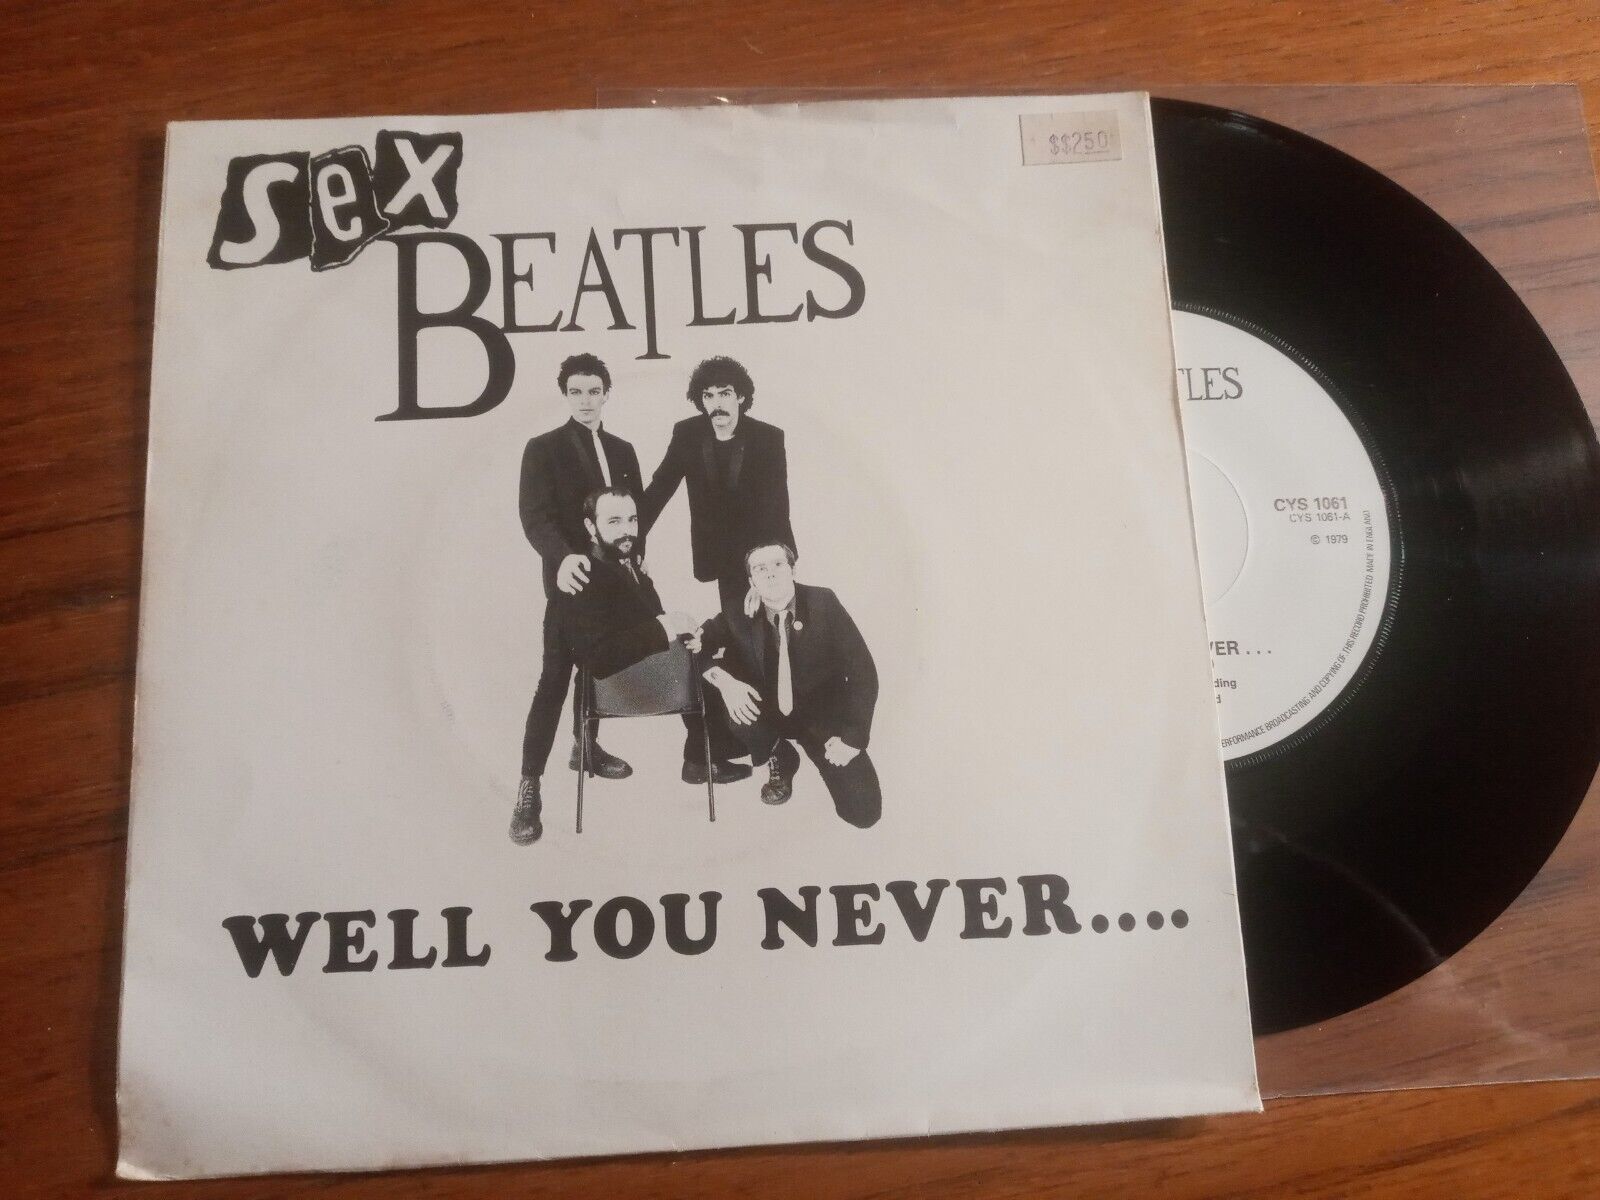 Sex Beatles – Well You Never... 1979 UK Vinyl, 7", 45 RPM, Single